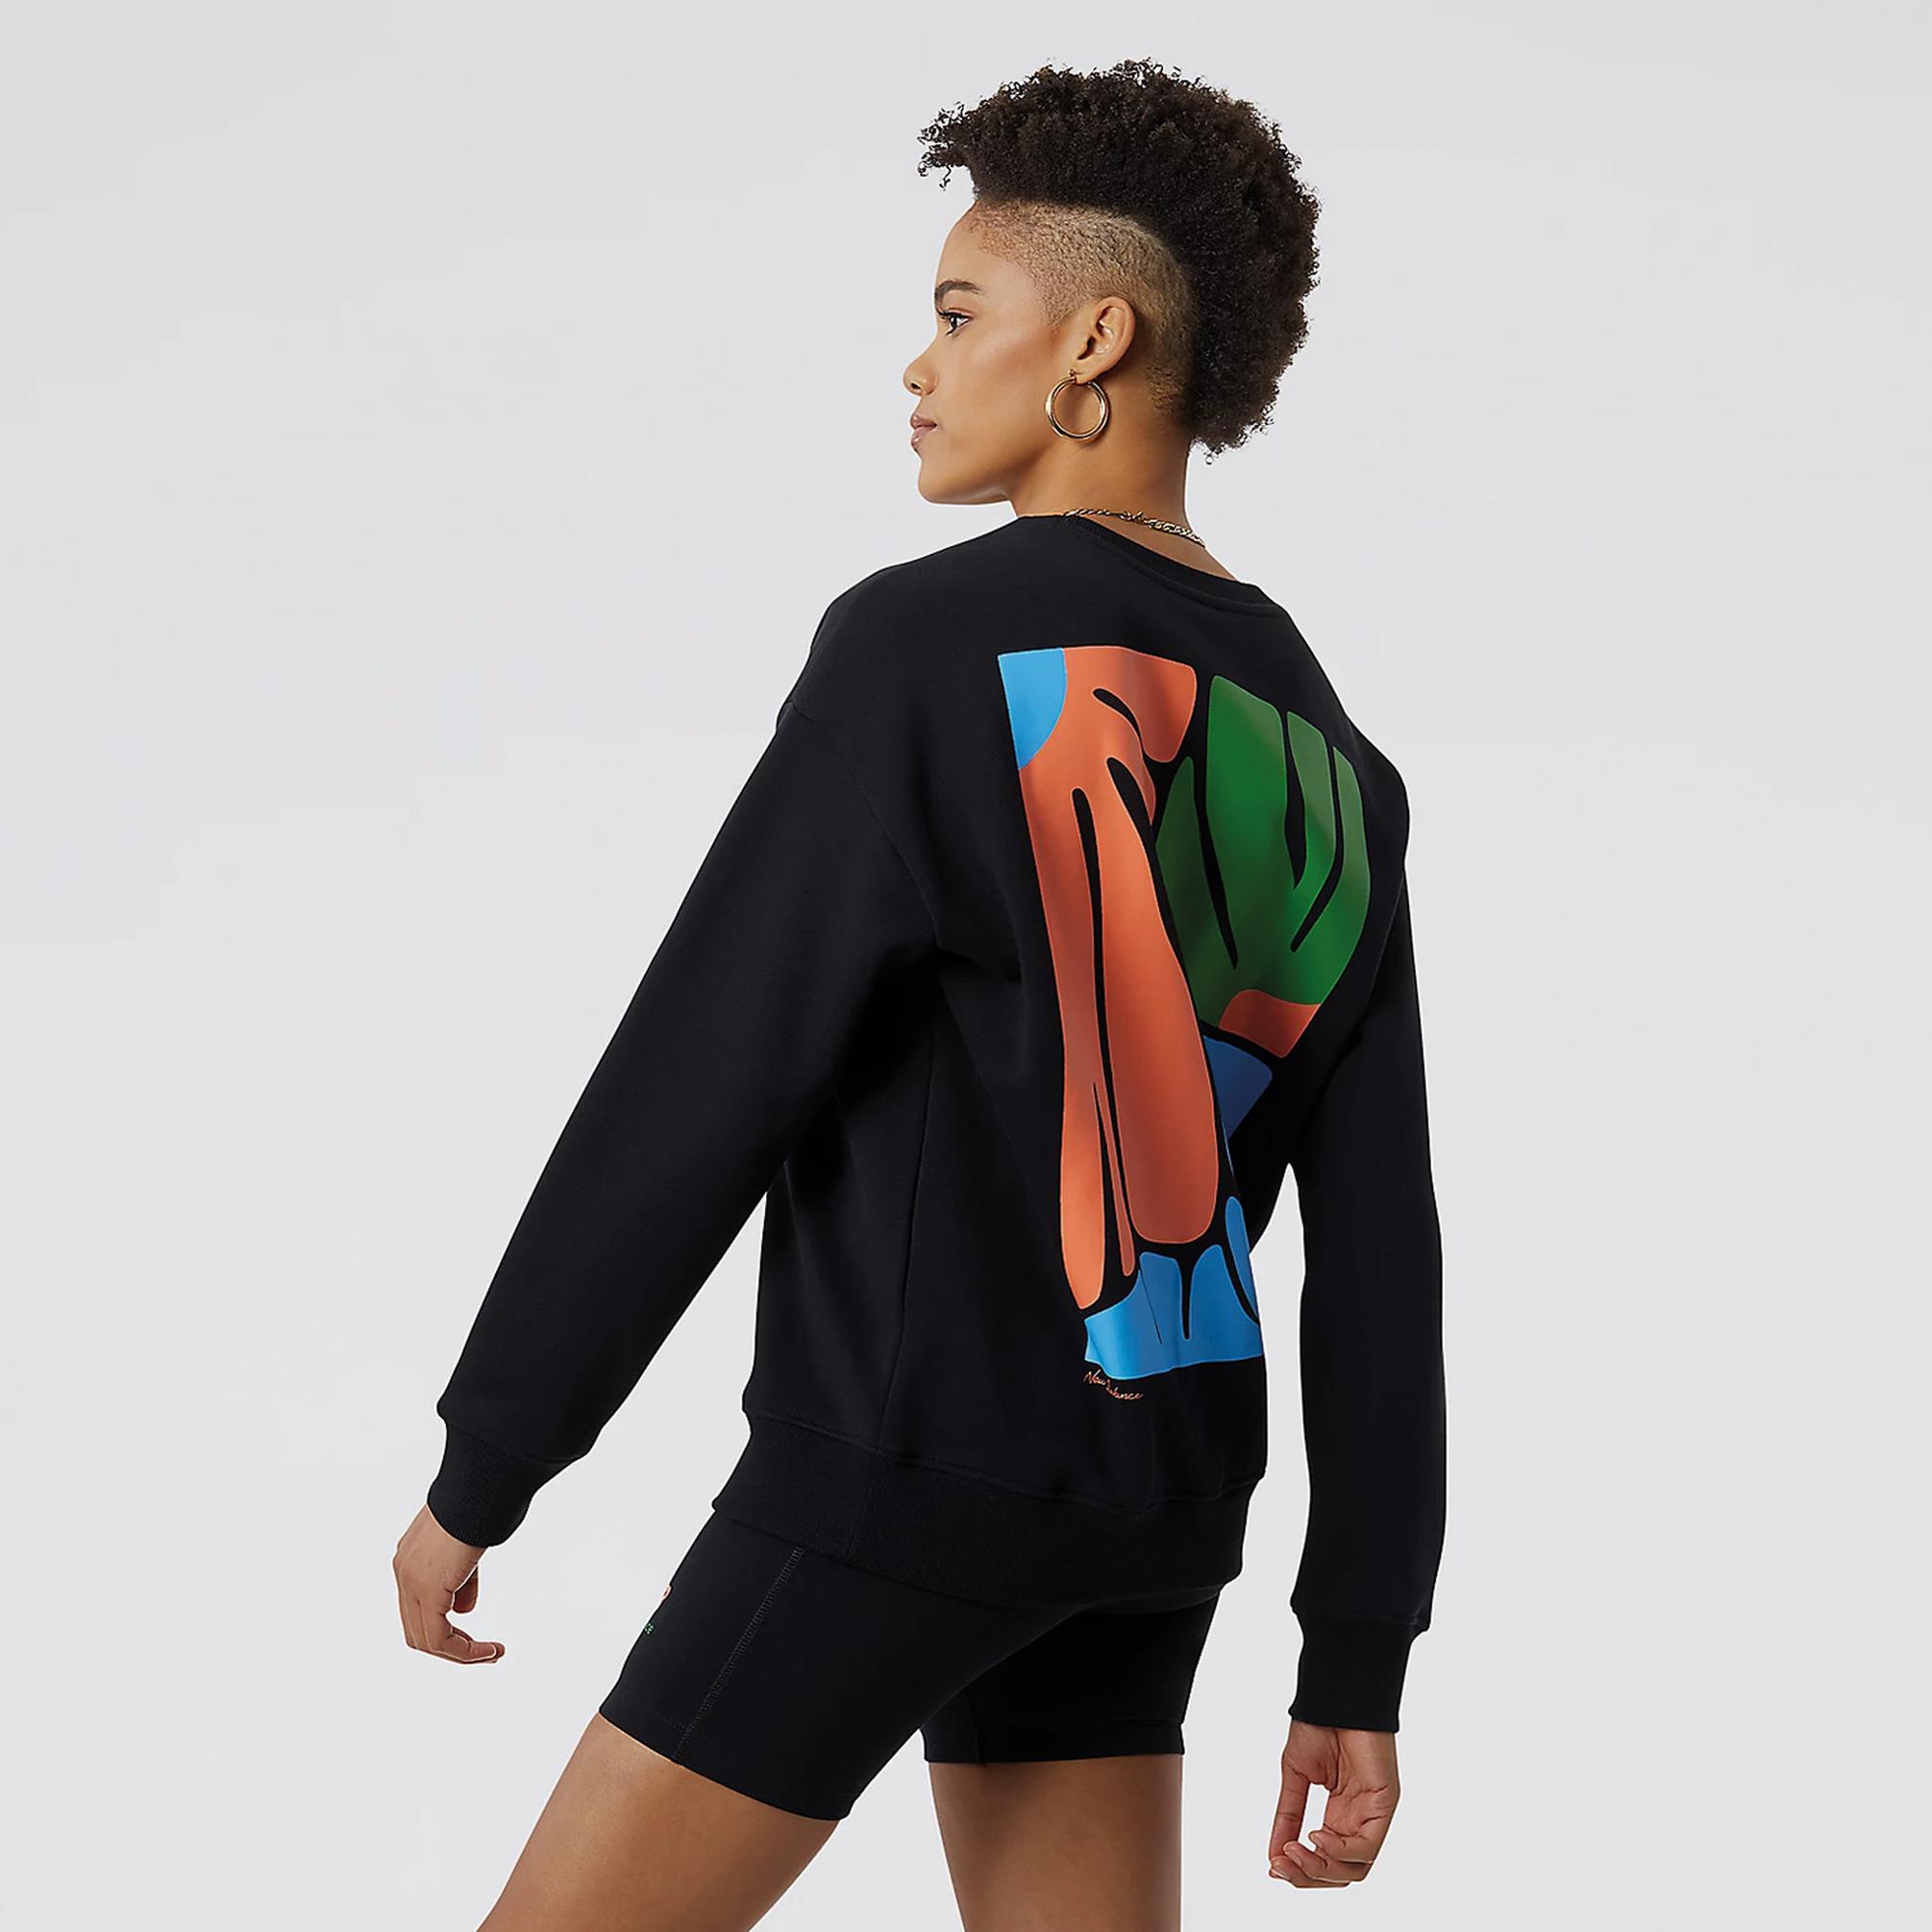  New Balance Athletics Kim Van Vuuren Kadın Siyah Sweatshirt